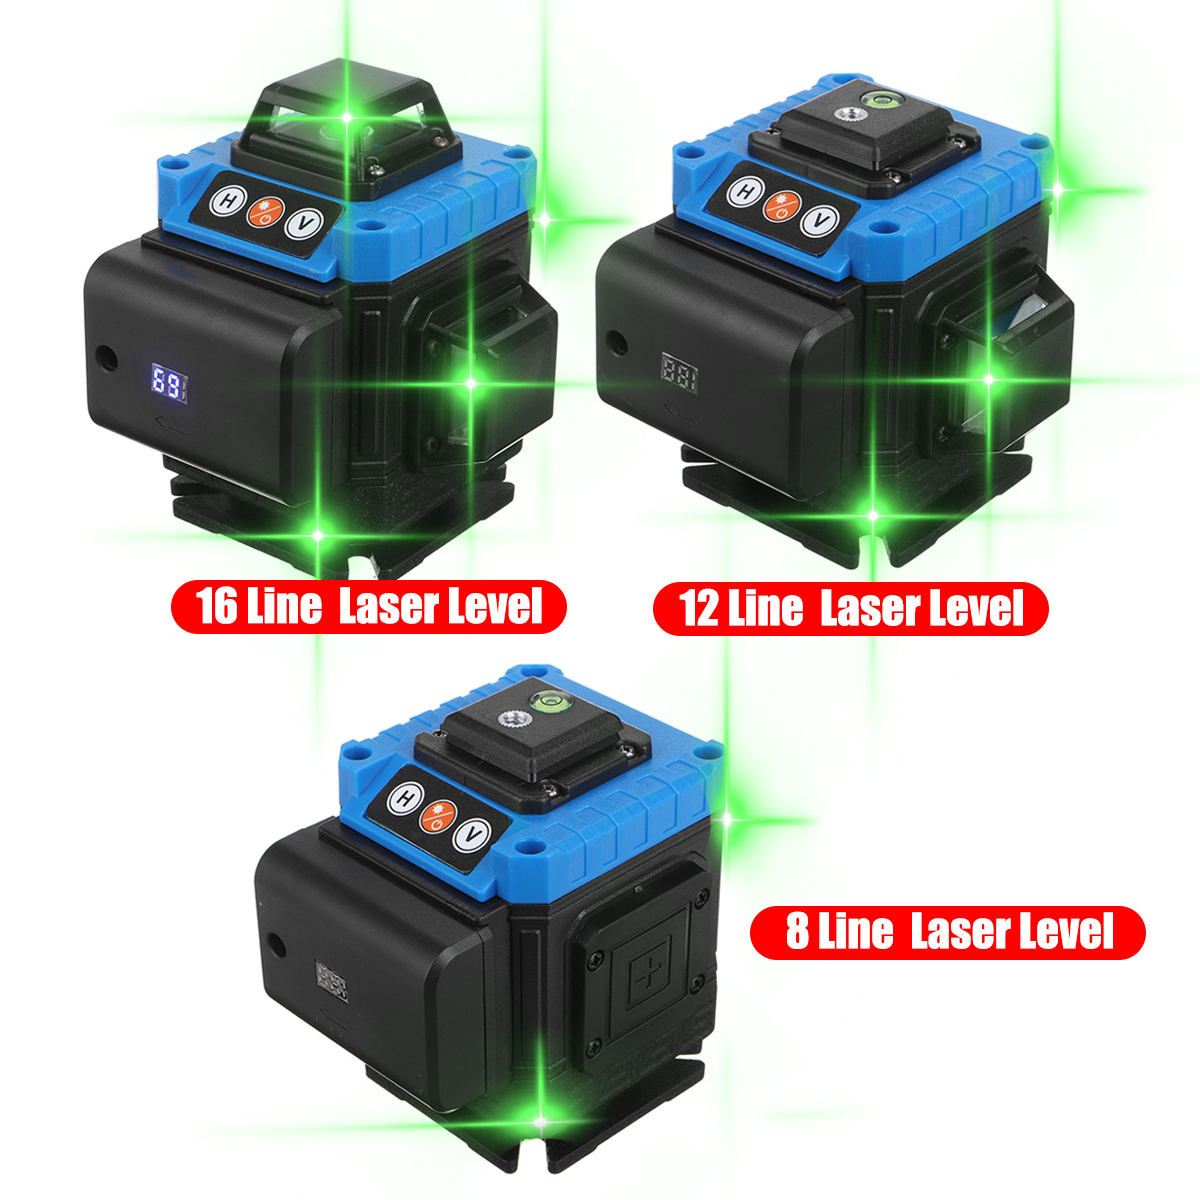 81216-Line-Laser-Level-Digital-Self-Leveling-360deg-Rotary-Measuring-Machine-1713755-2